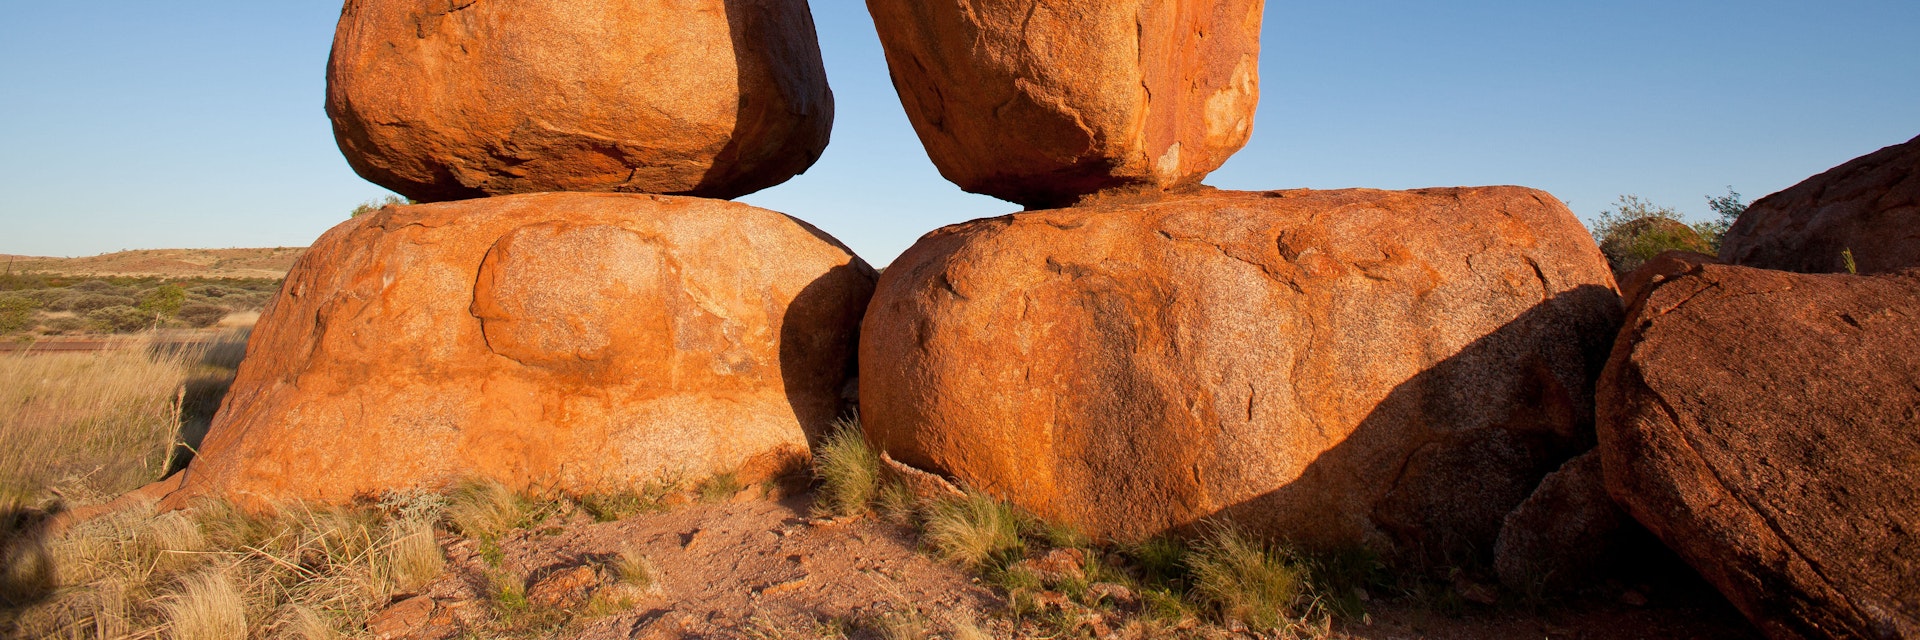 Devil's Marbles rock formations in the Australian desert.